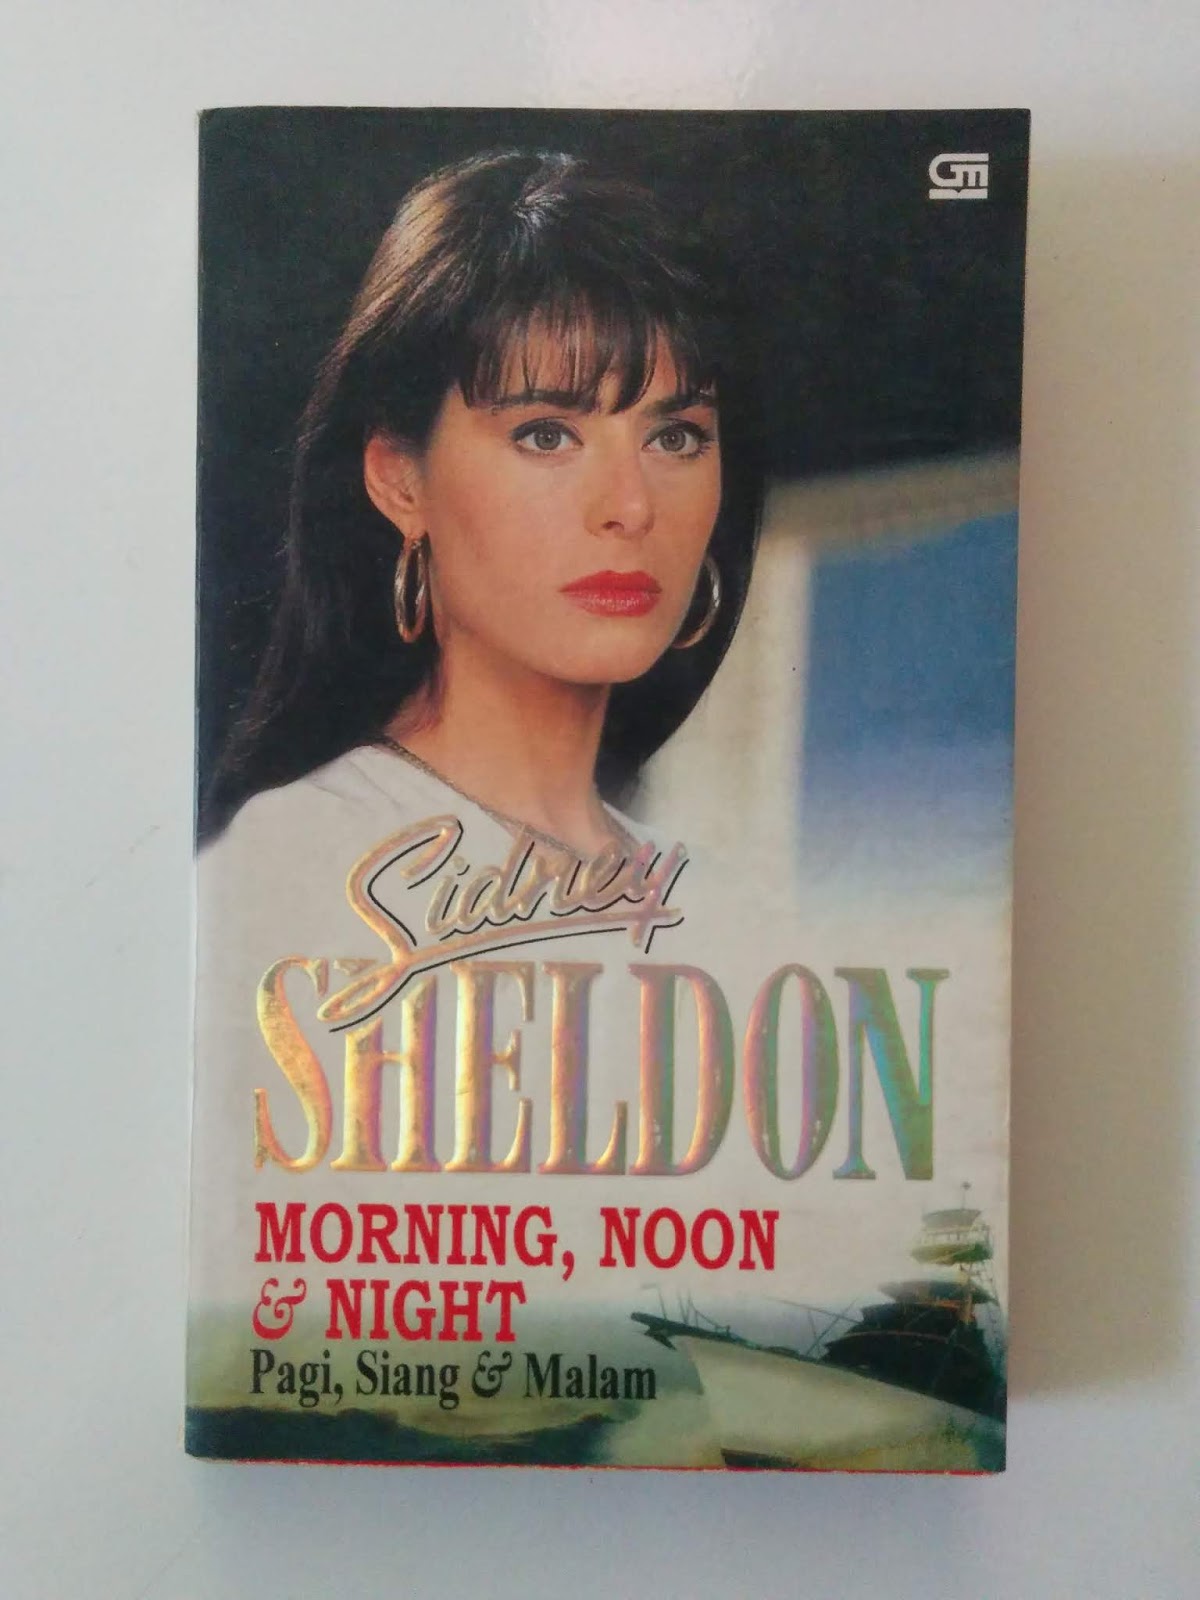 Night Noon Cassidy. Morning Noon Night book Cover. Morning Noon Night book back Cover.